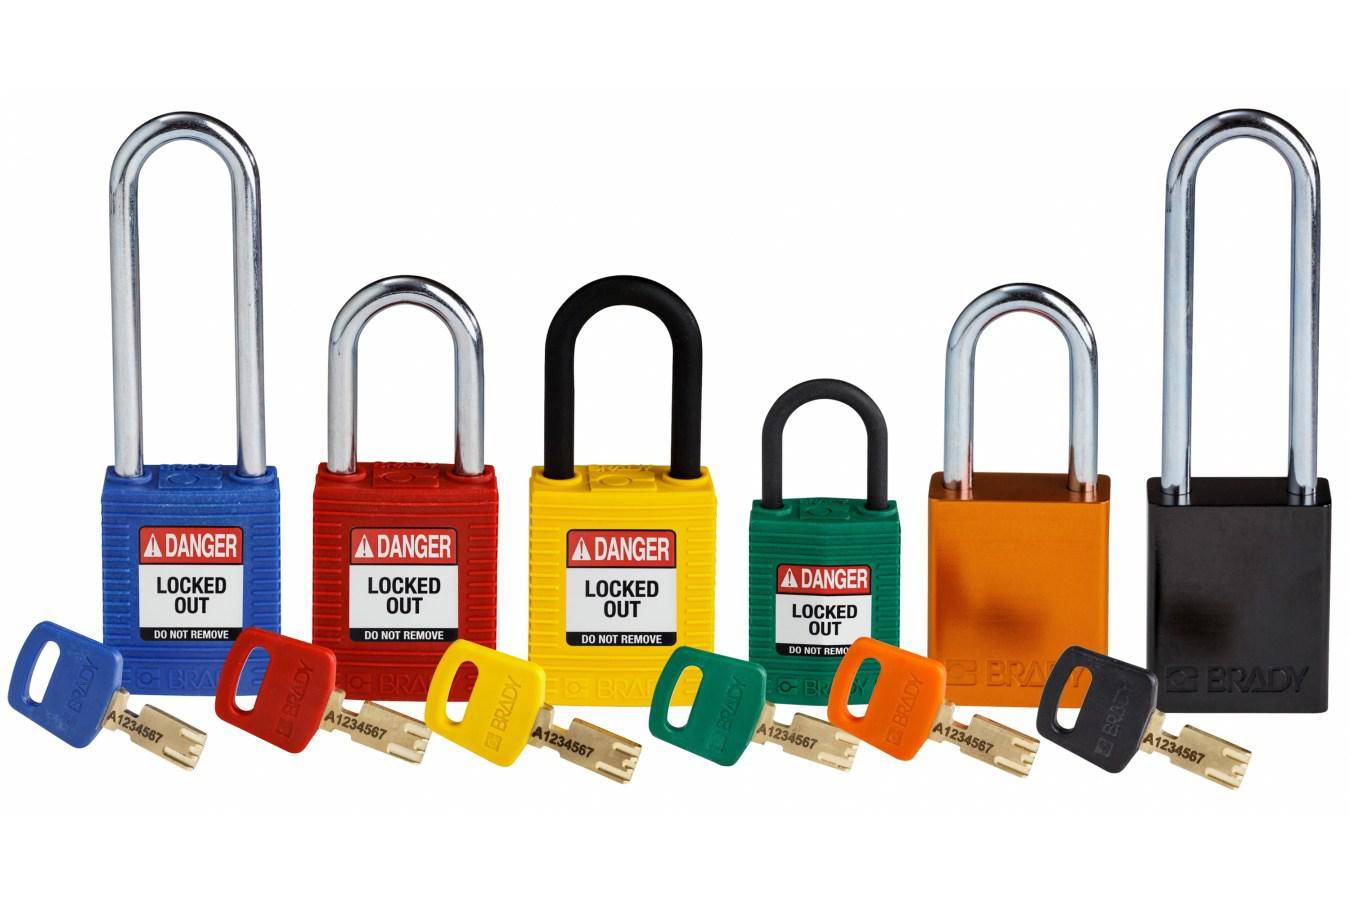 New SafeKey Padlock: the safest padlock for Lockout/Tagout 